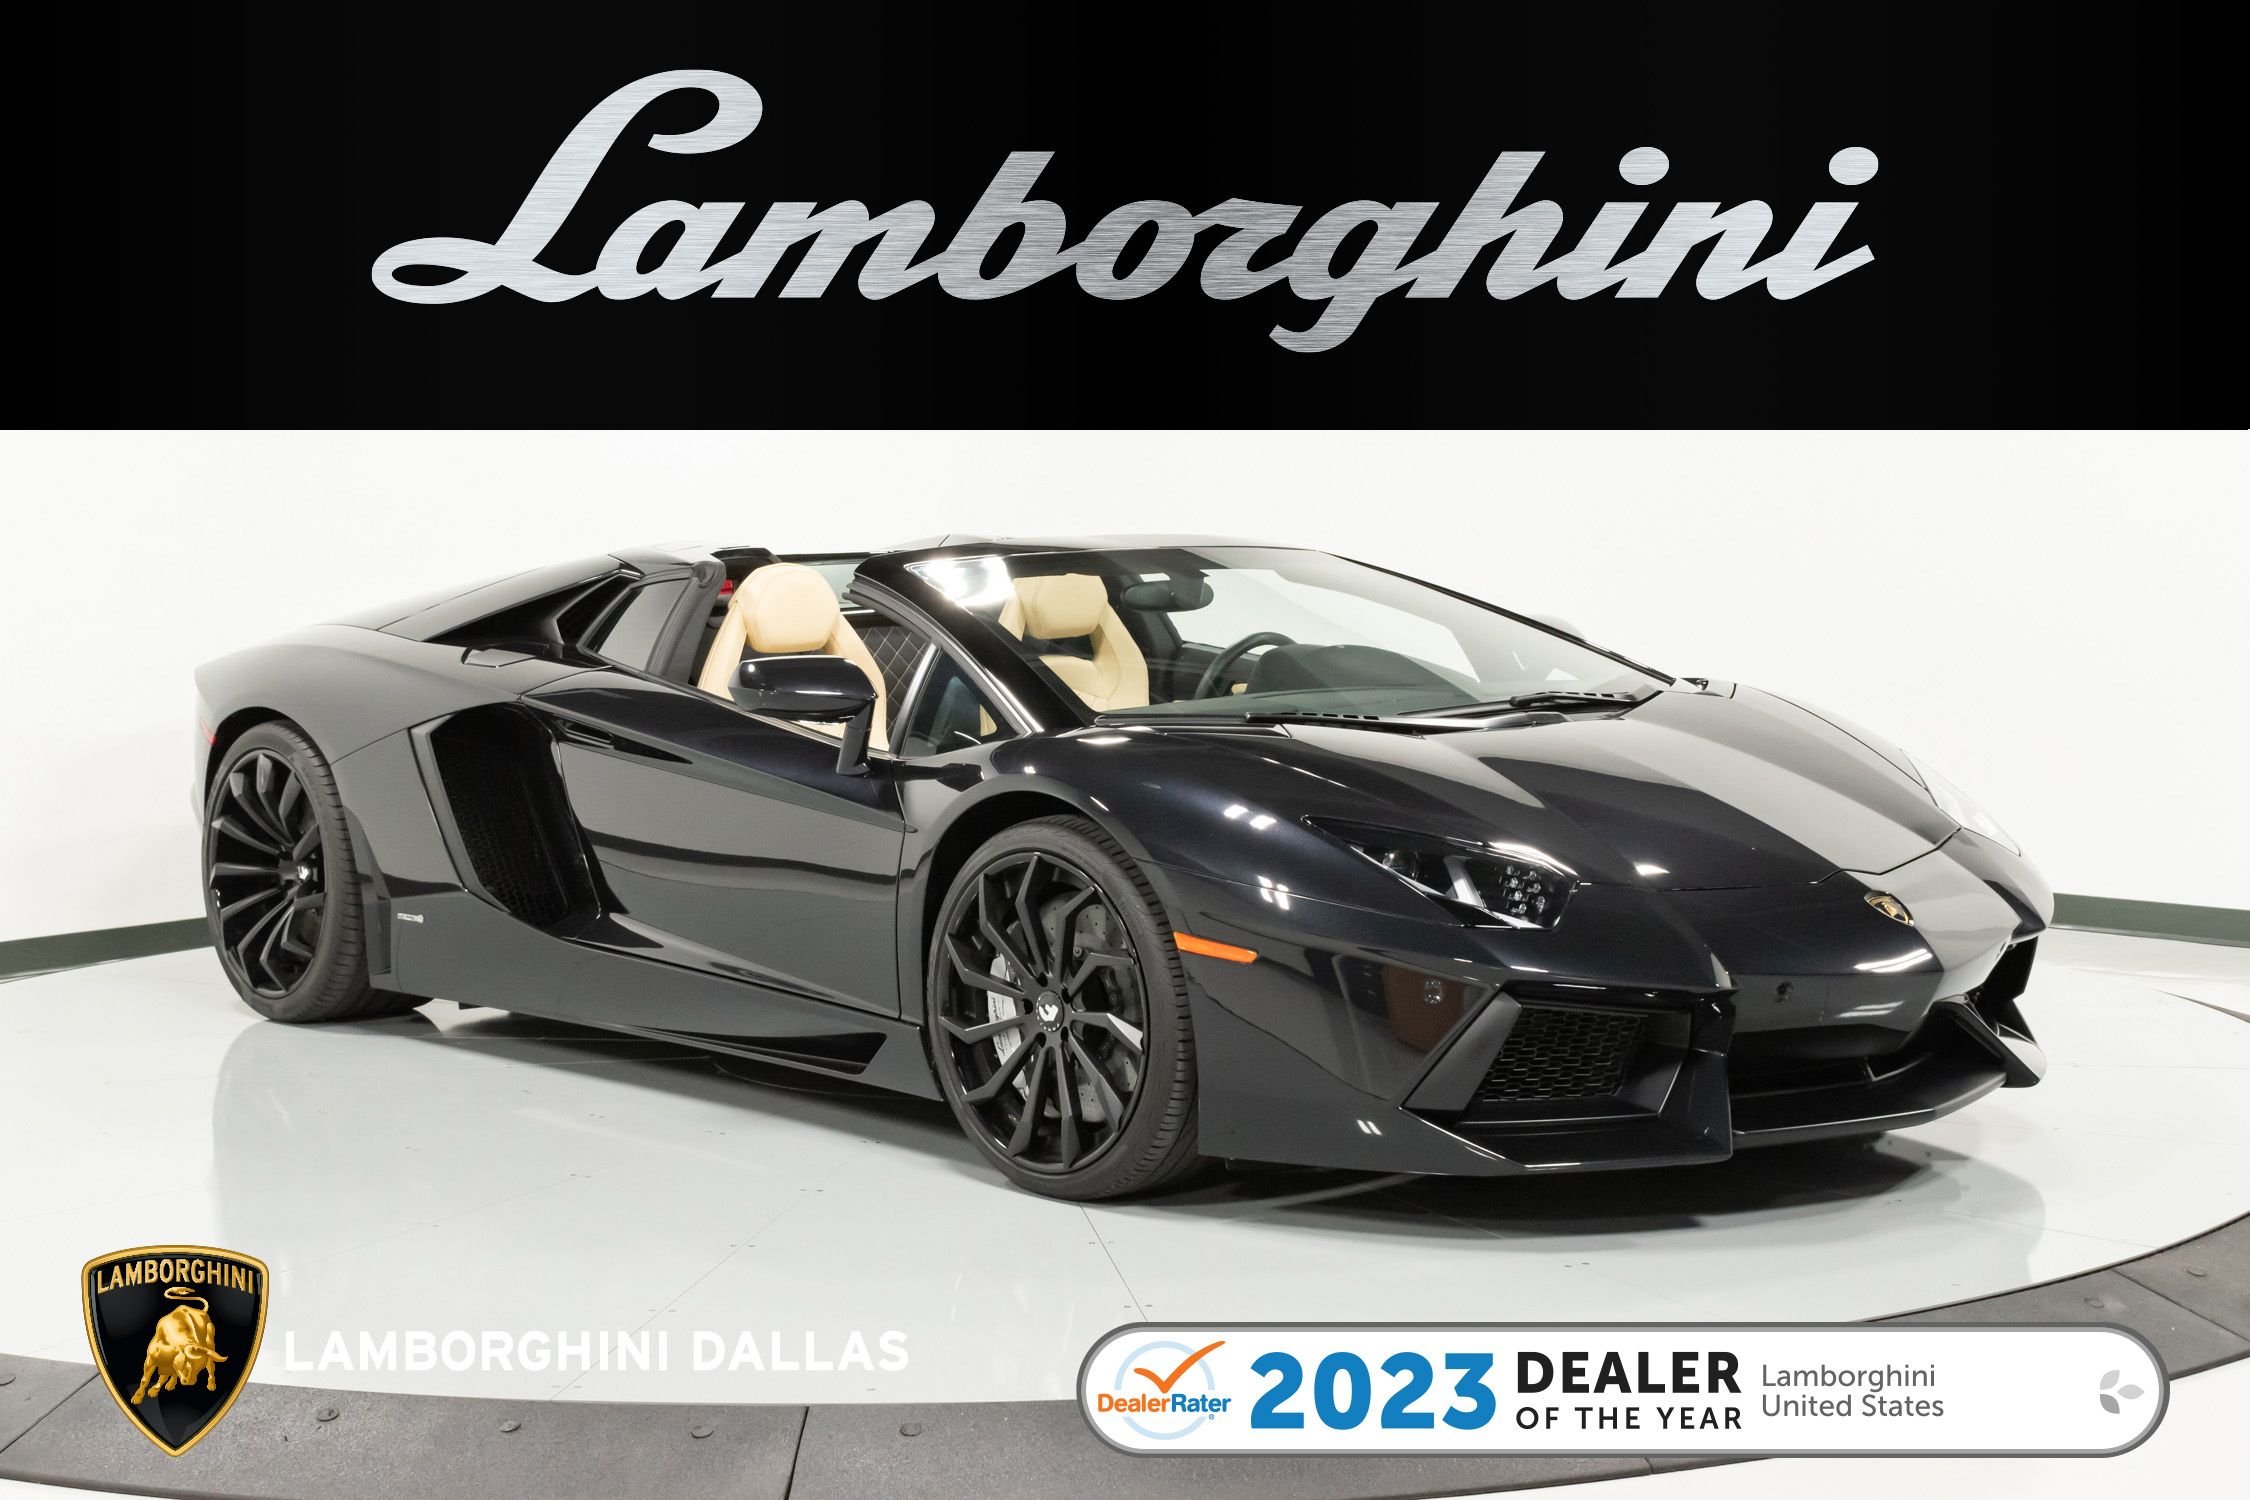 Lamborghini Dallas - Lamborghini, Service Center, Used Car Dealer -  Dealership Ratings